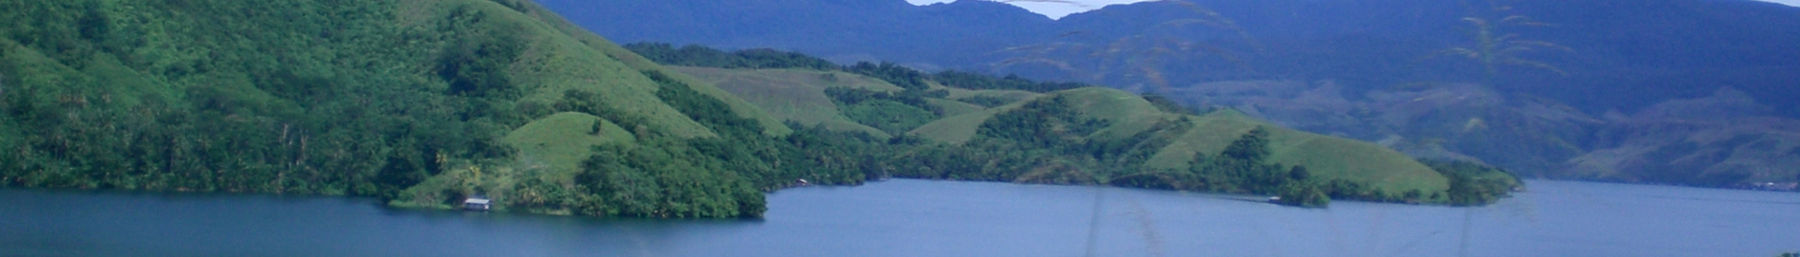 Papua banner.jpg